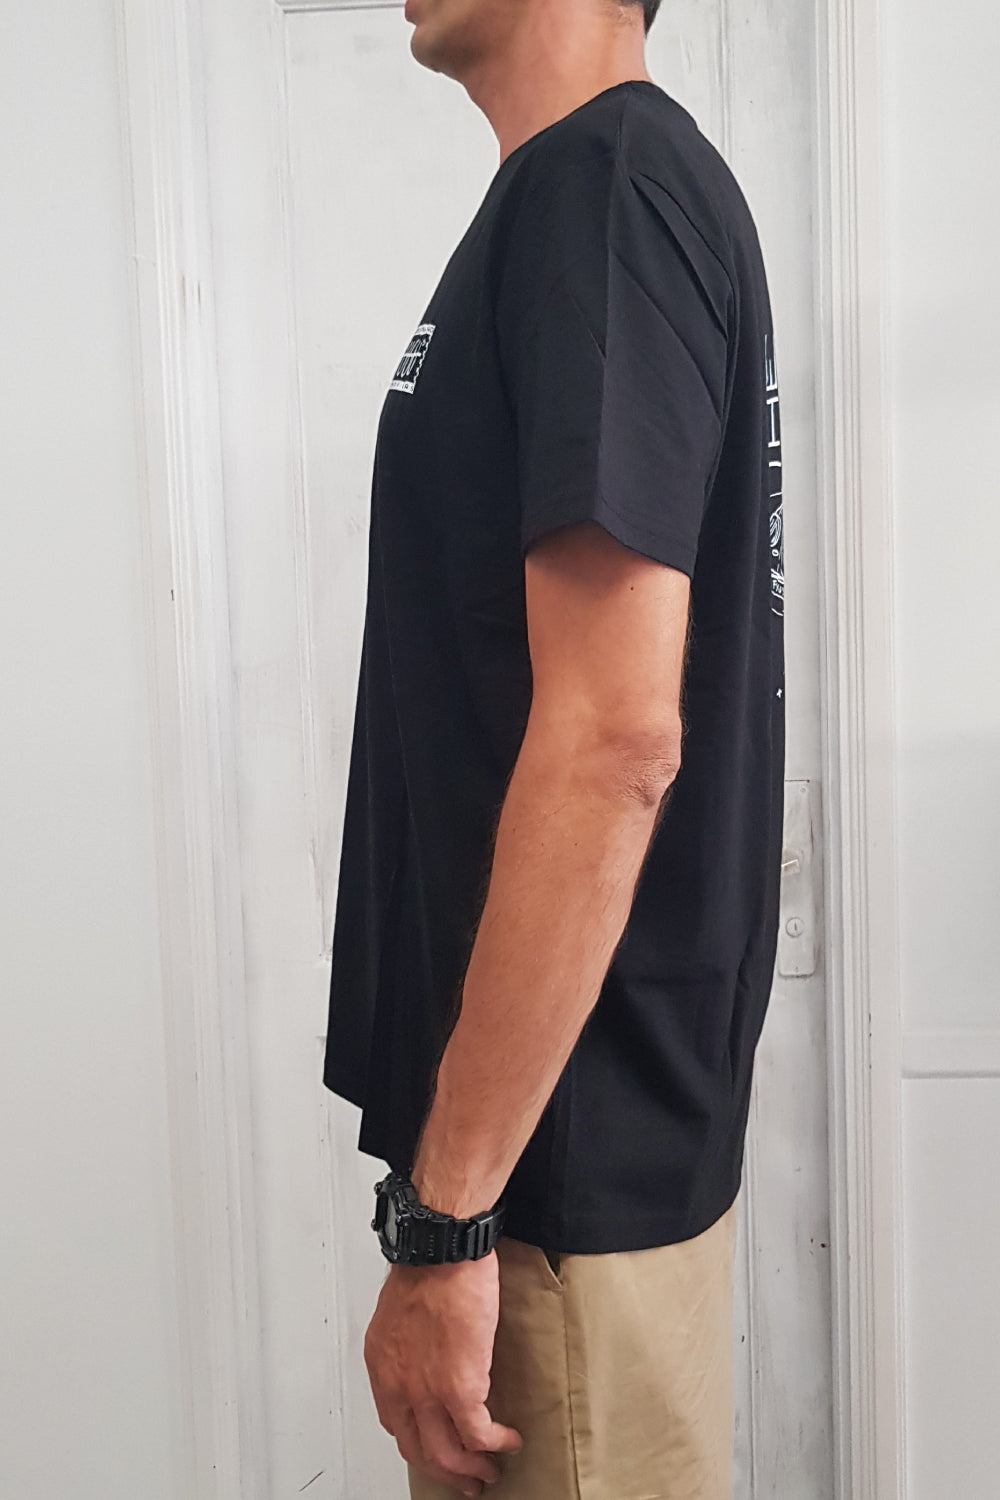 vista lateral camiseta artesana algodón orgánico color negro serigrafiado a mano 